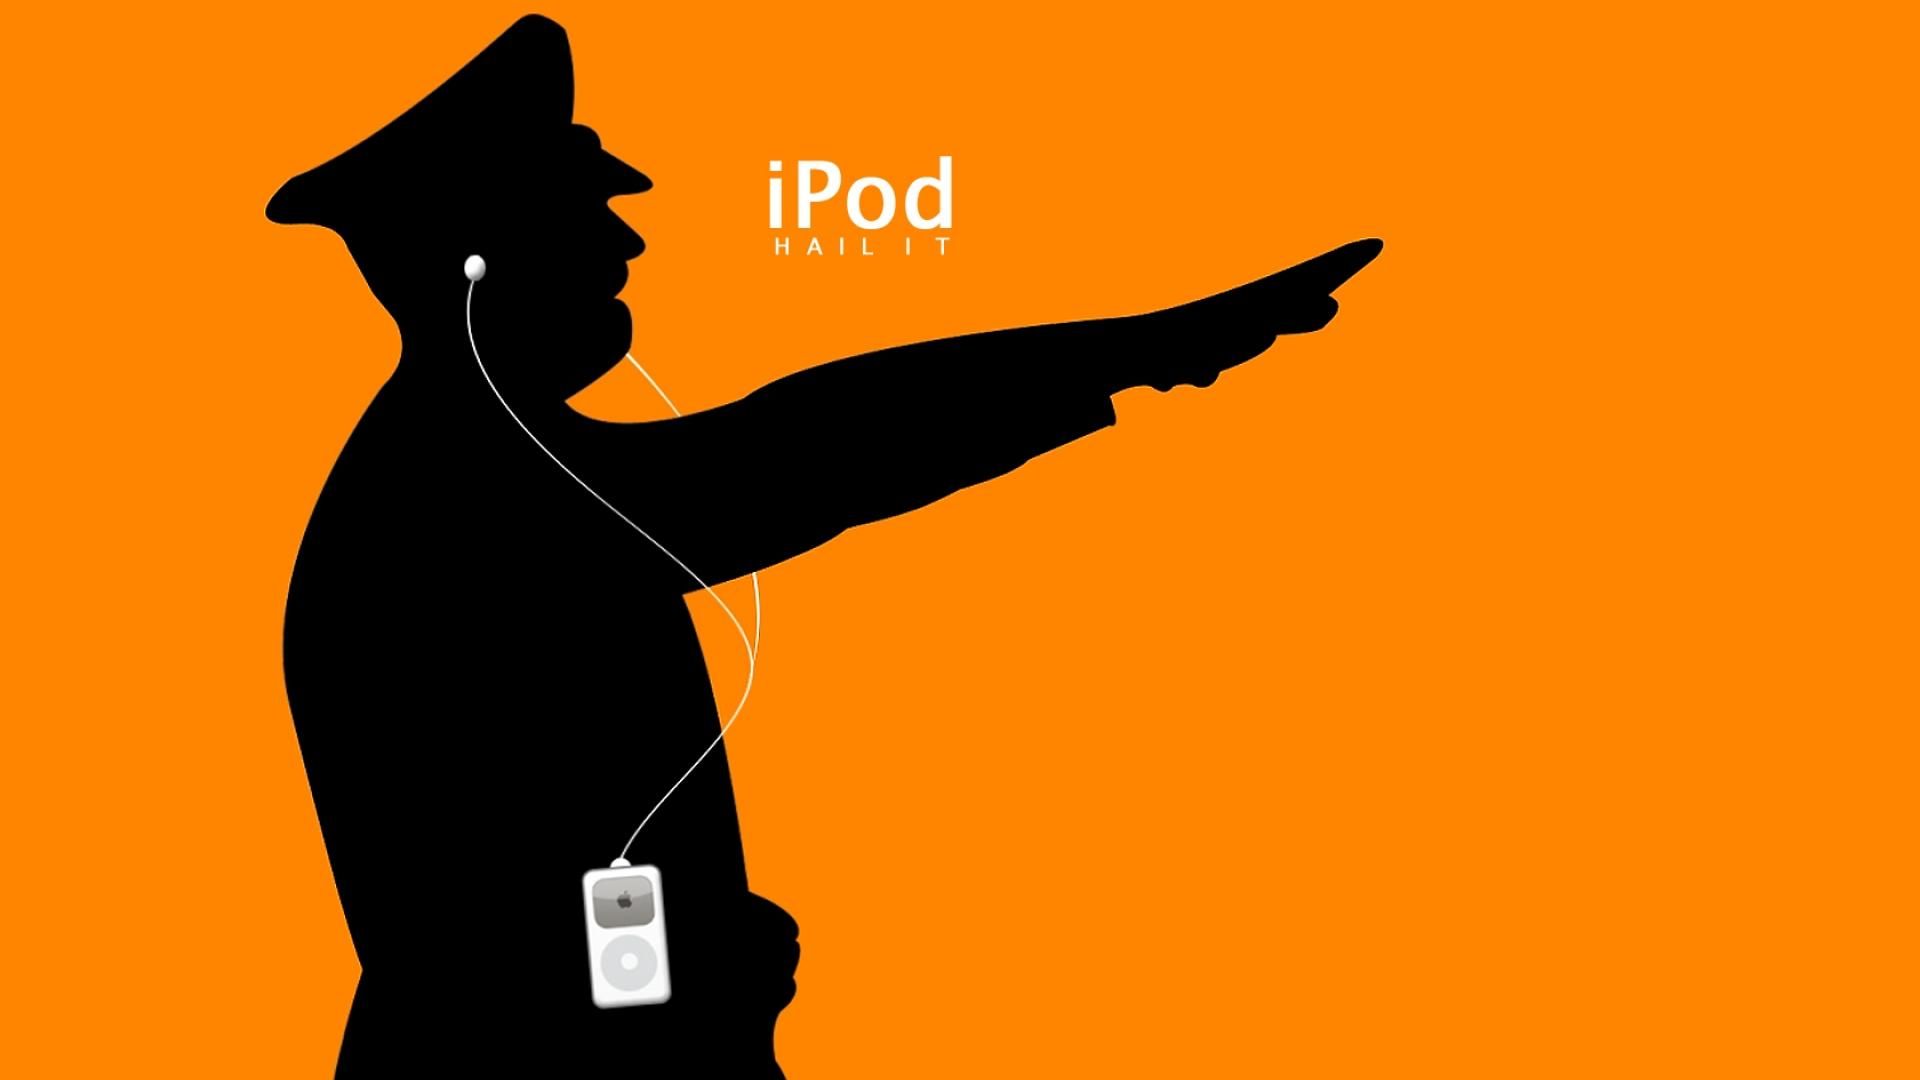 Apple inc mac brands ipod orange wallpaper - High resolution